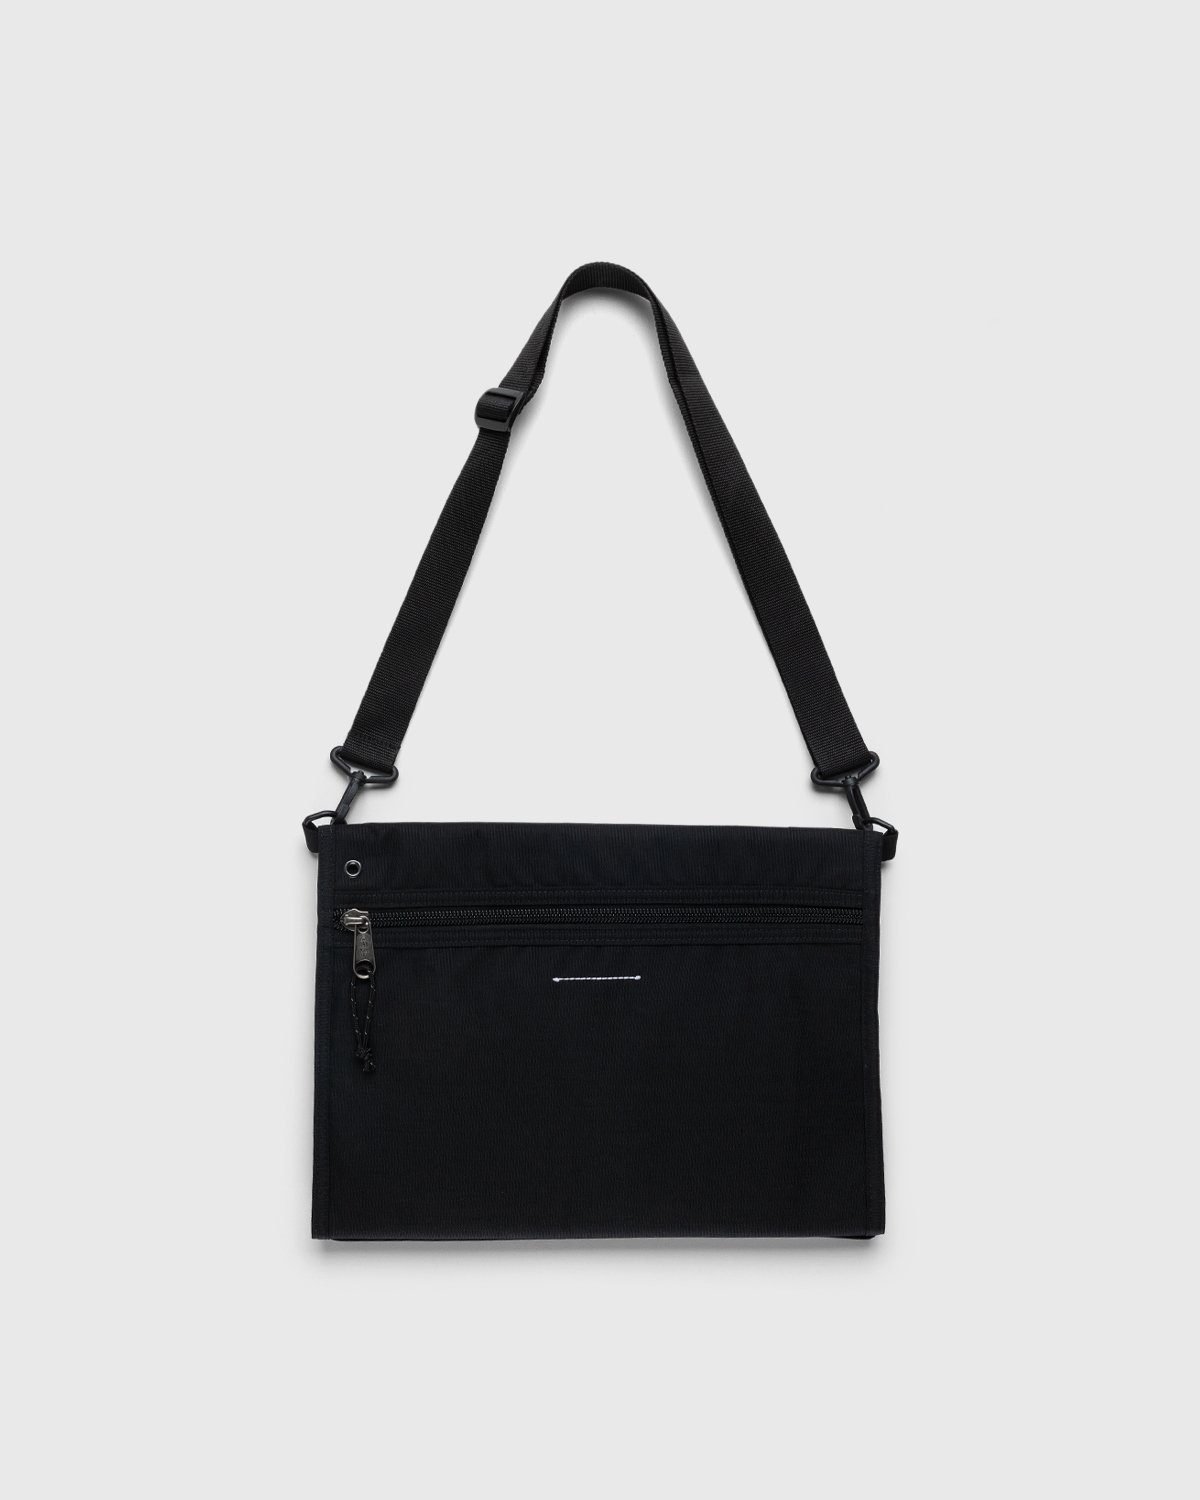 MM6 Maison Margiela x Eastpak - Borsa Tracolla Shoulder Bag Black - Accessories - Black - Image 2